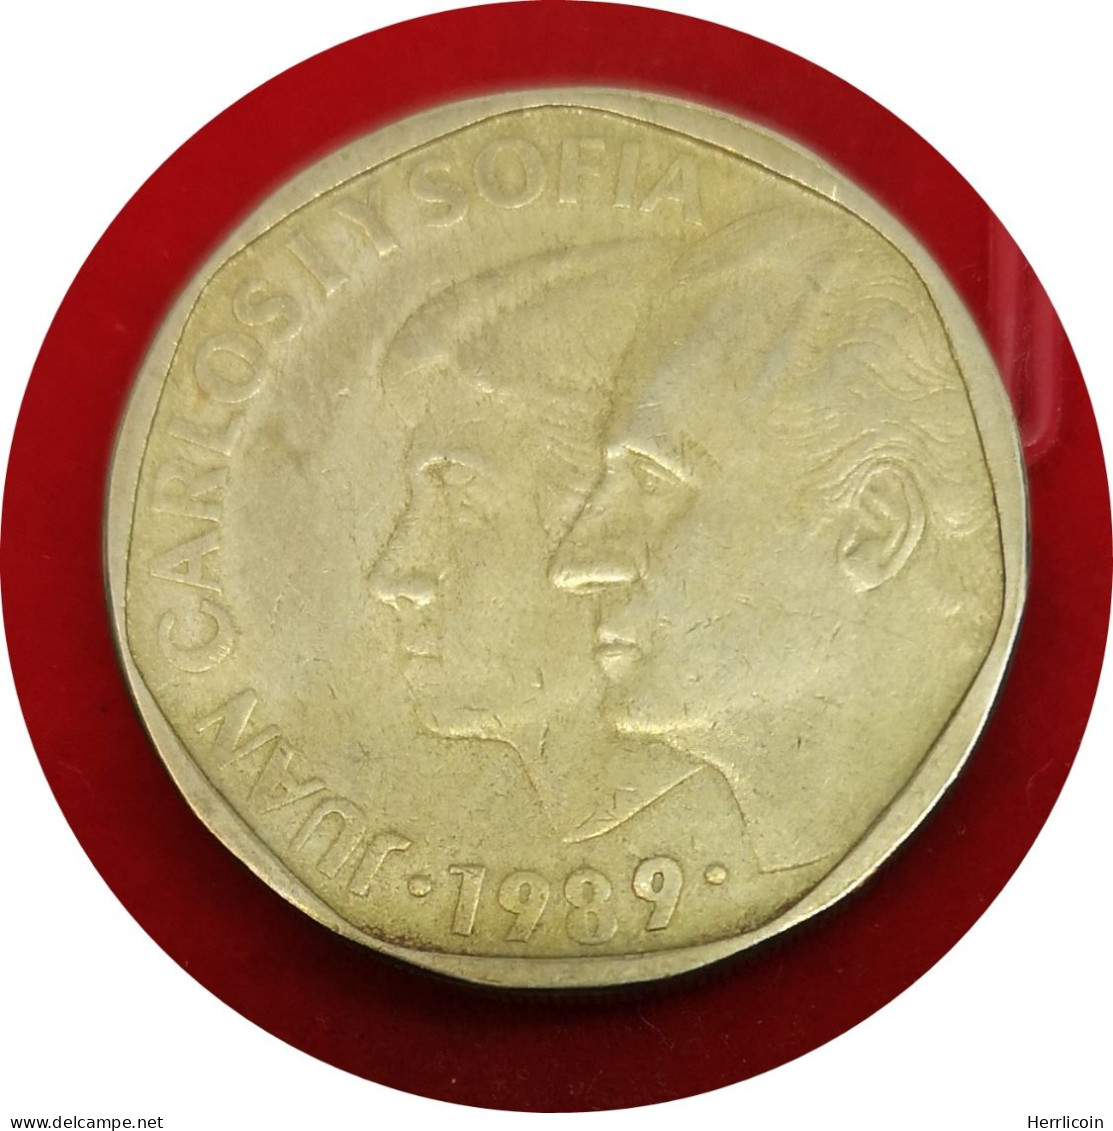 Monnaie Espagne - 1989 - 500 Pesetas Juan Carlos I - 500 Peseta